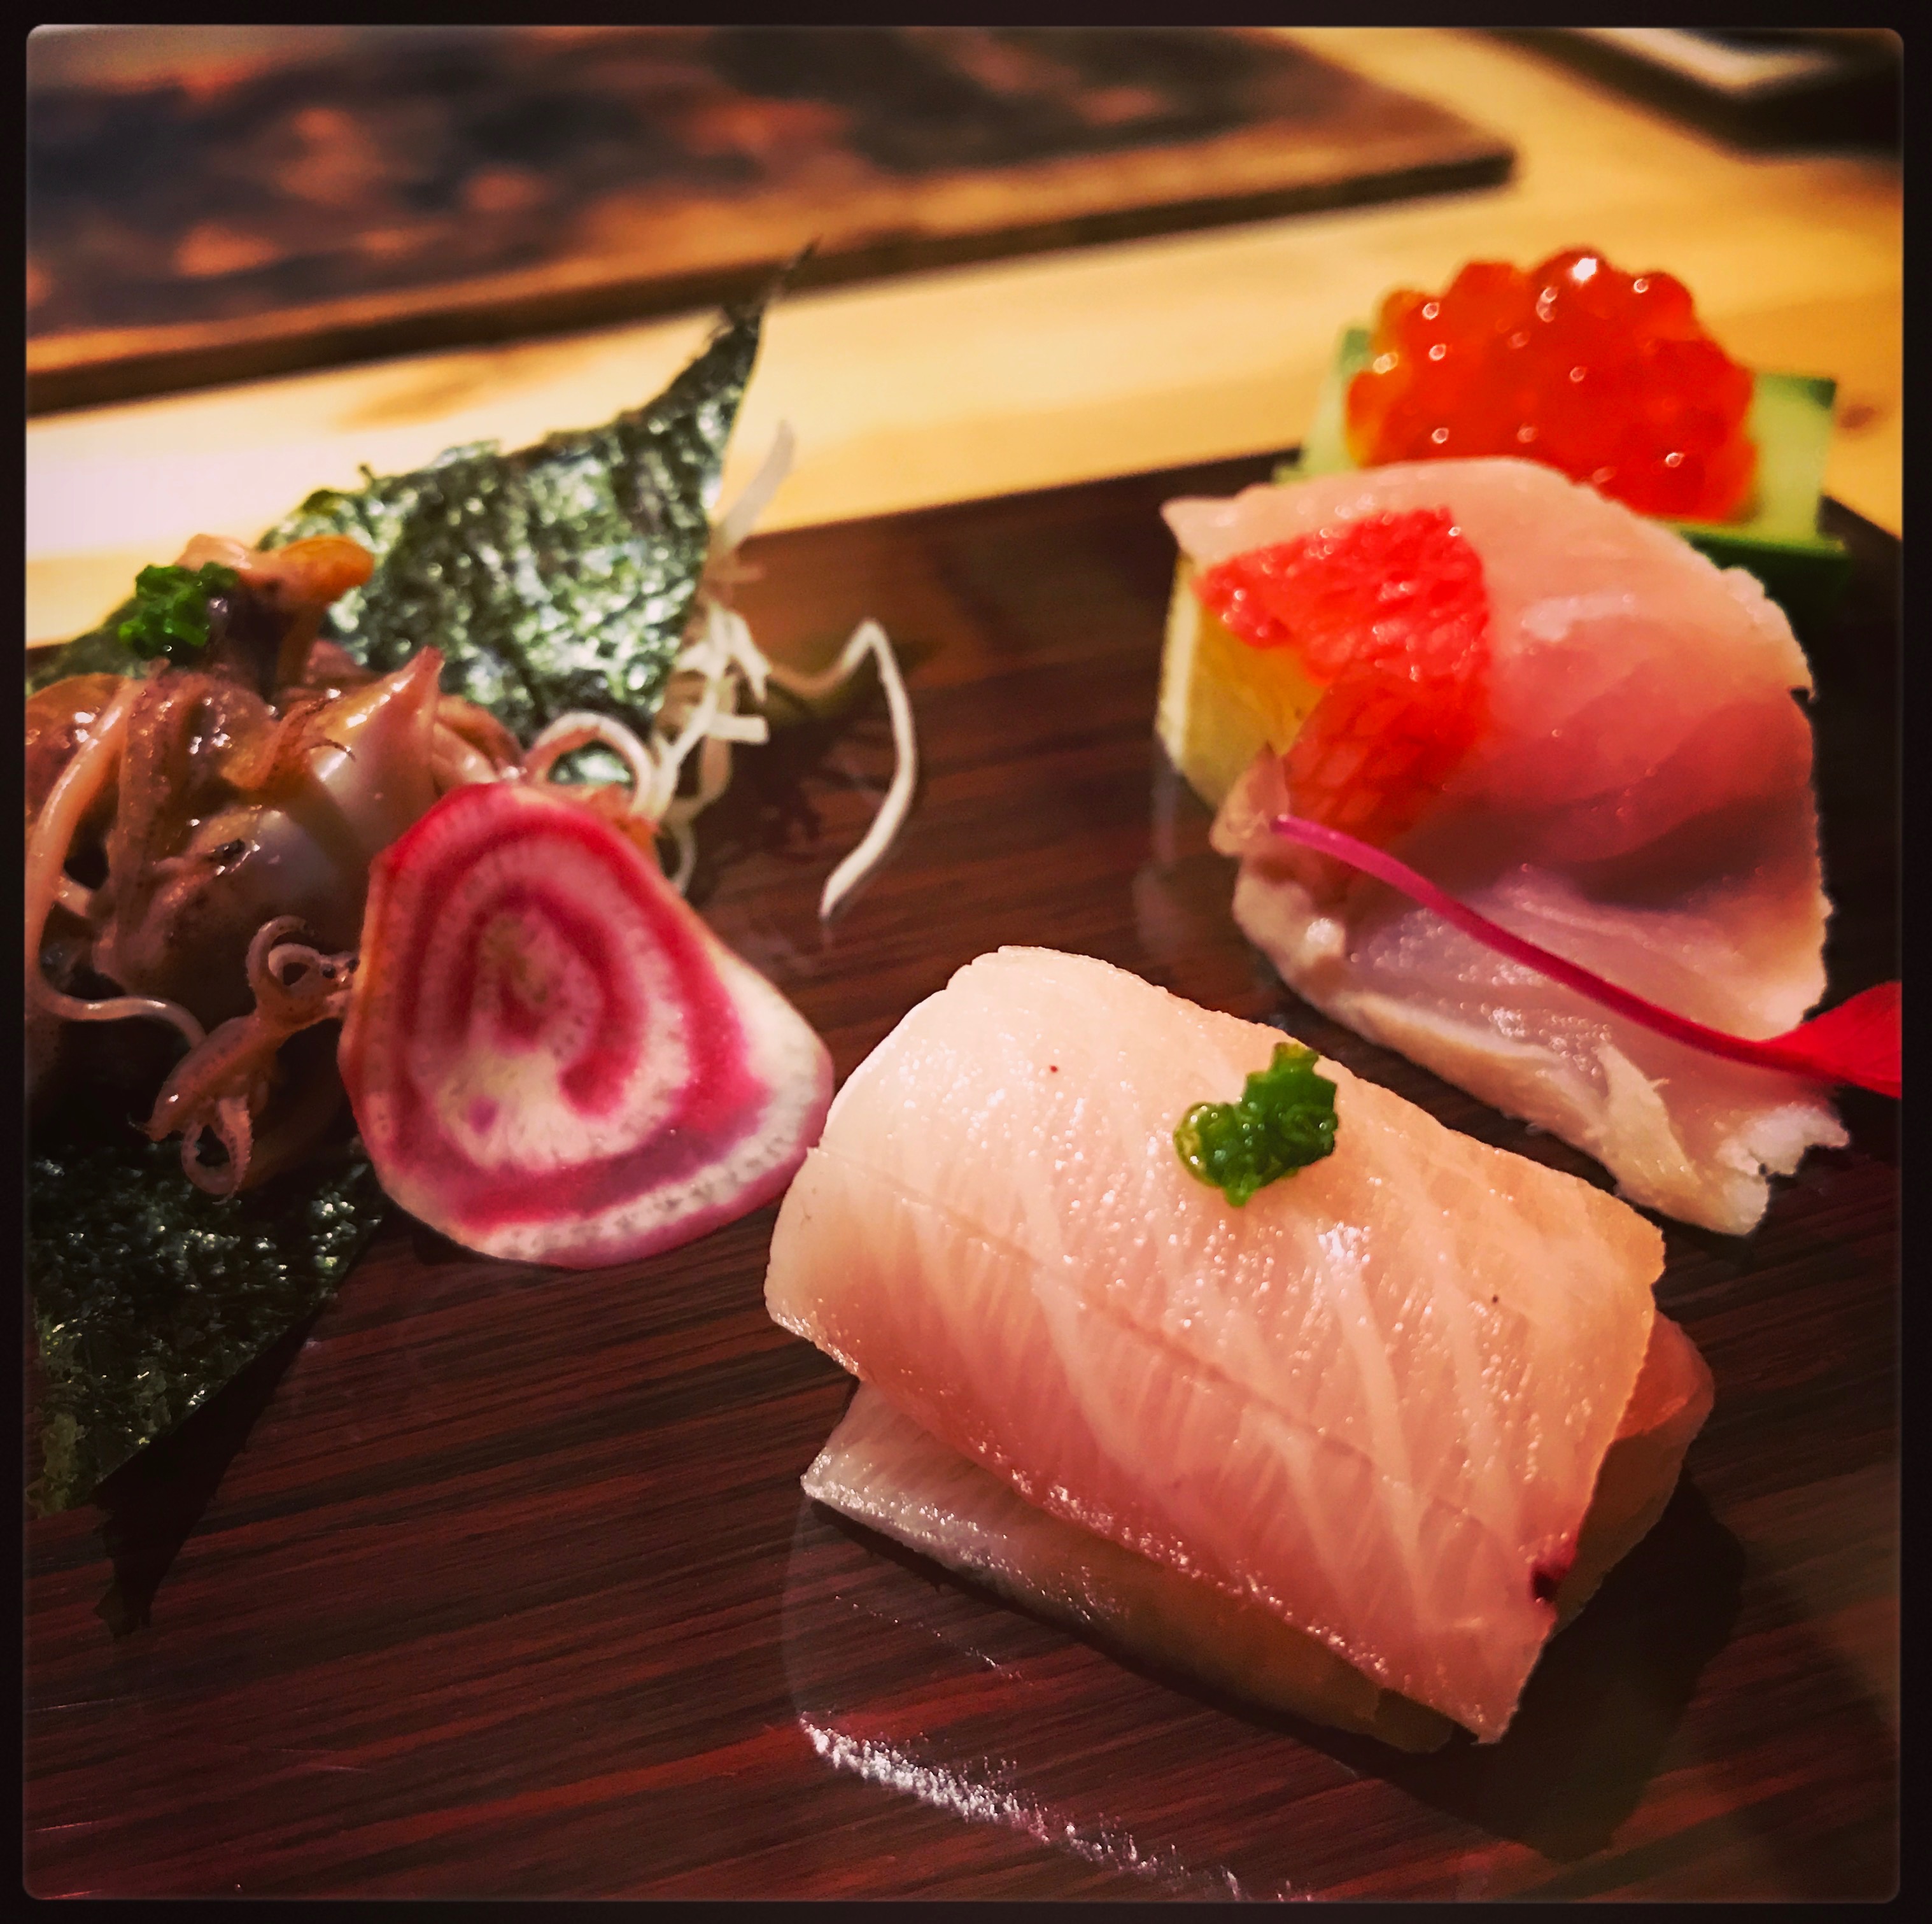 Sushi Ran - omakase - hotaru ika baby firefly squid - kinmedai golden eye snapper - buri toro wild yellowtail belly sashimi